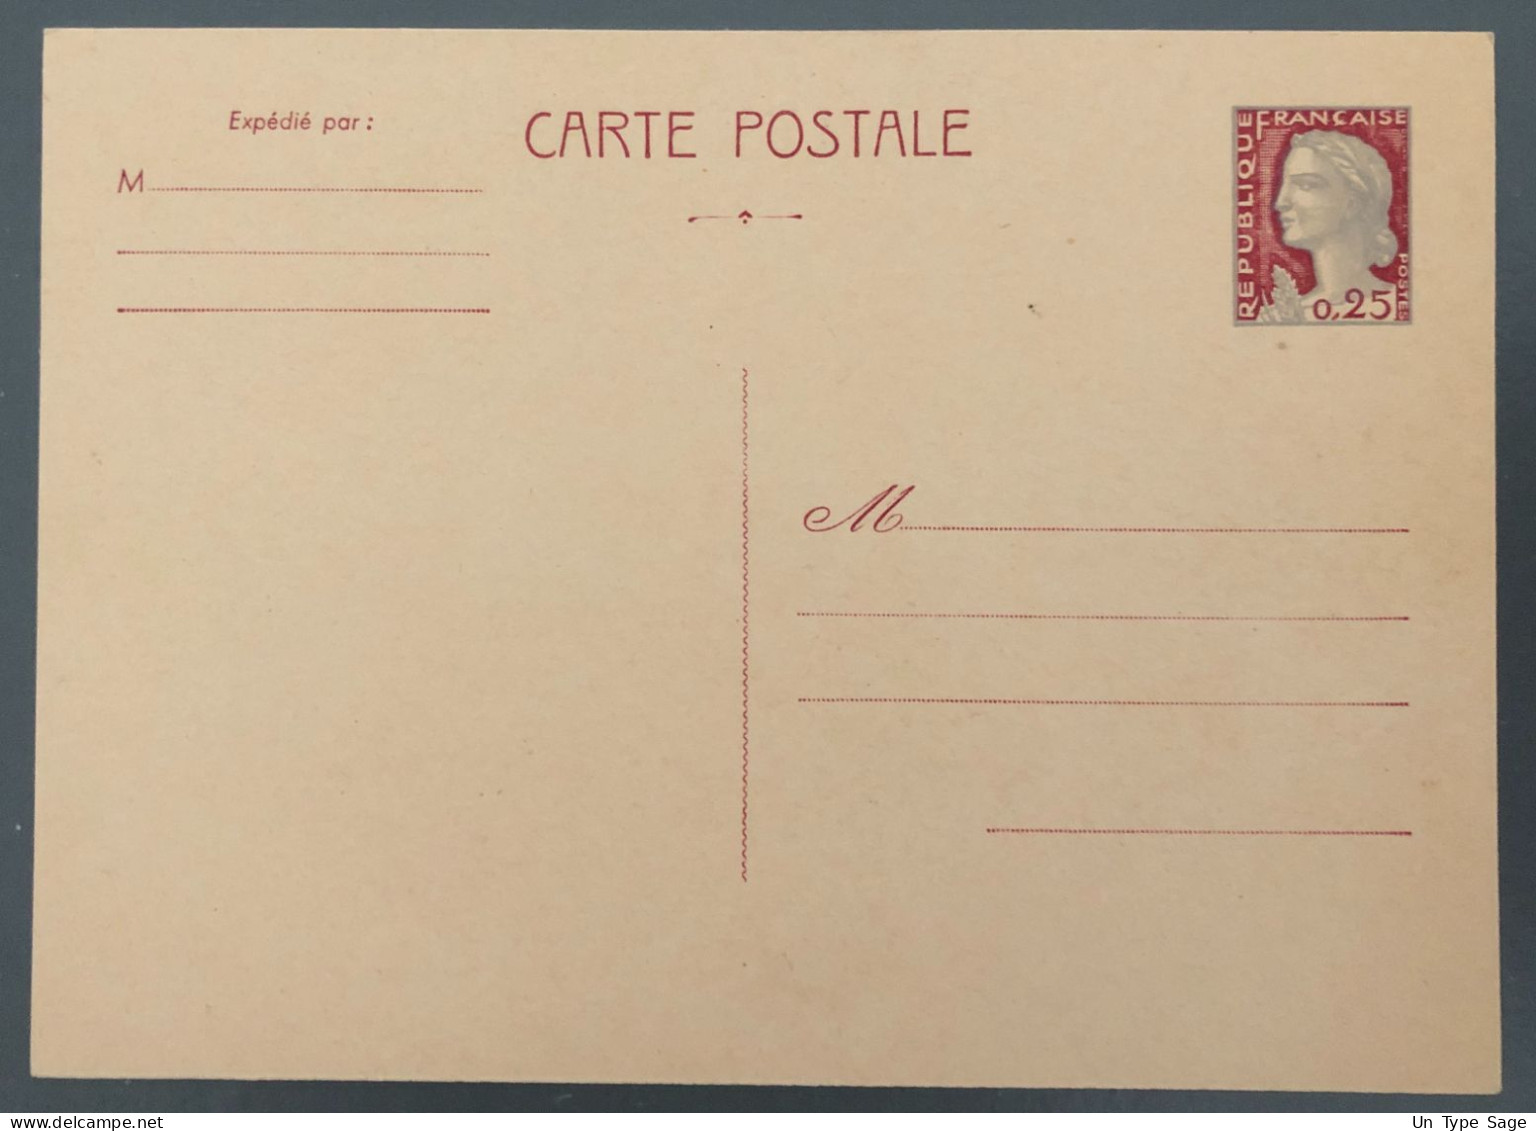 France Entier Type Marianne 25c. - Carte Postale - (B1973) - Bandas Para Periodicos